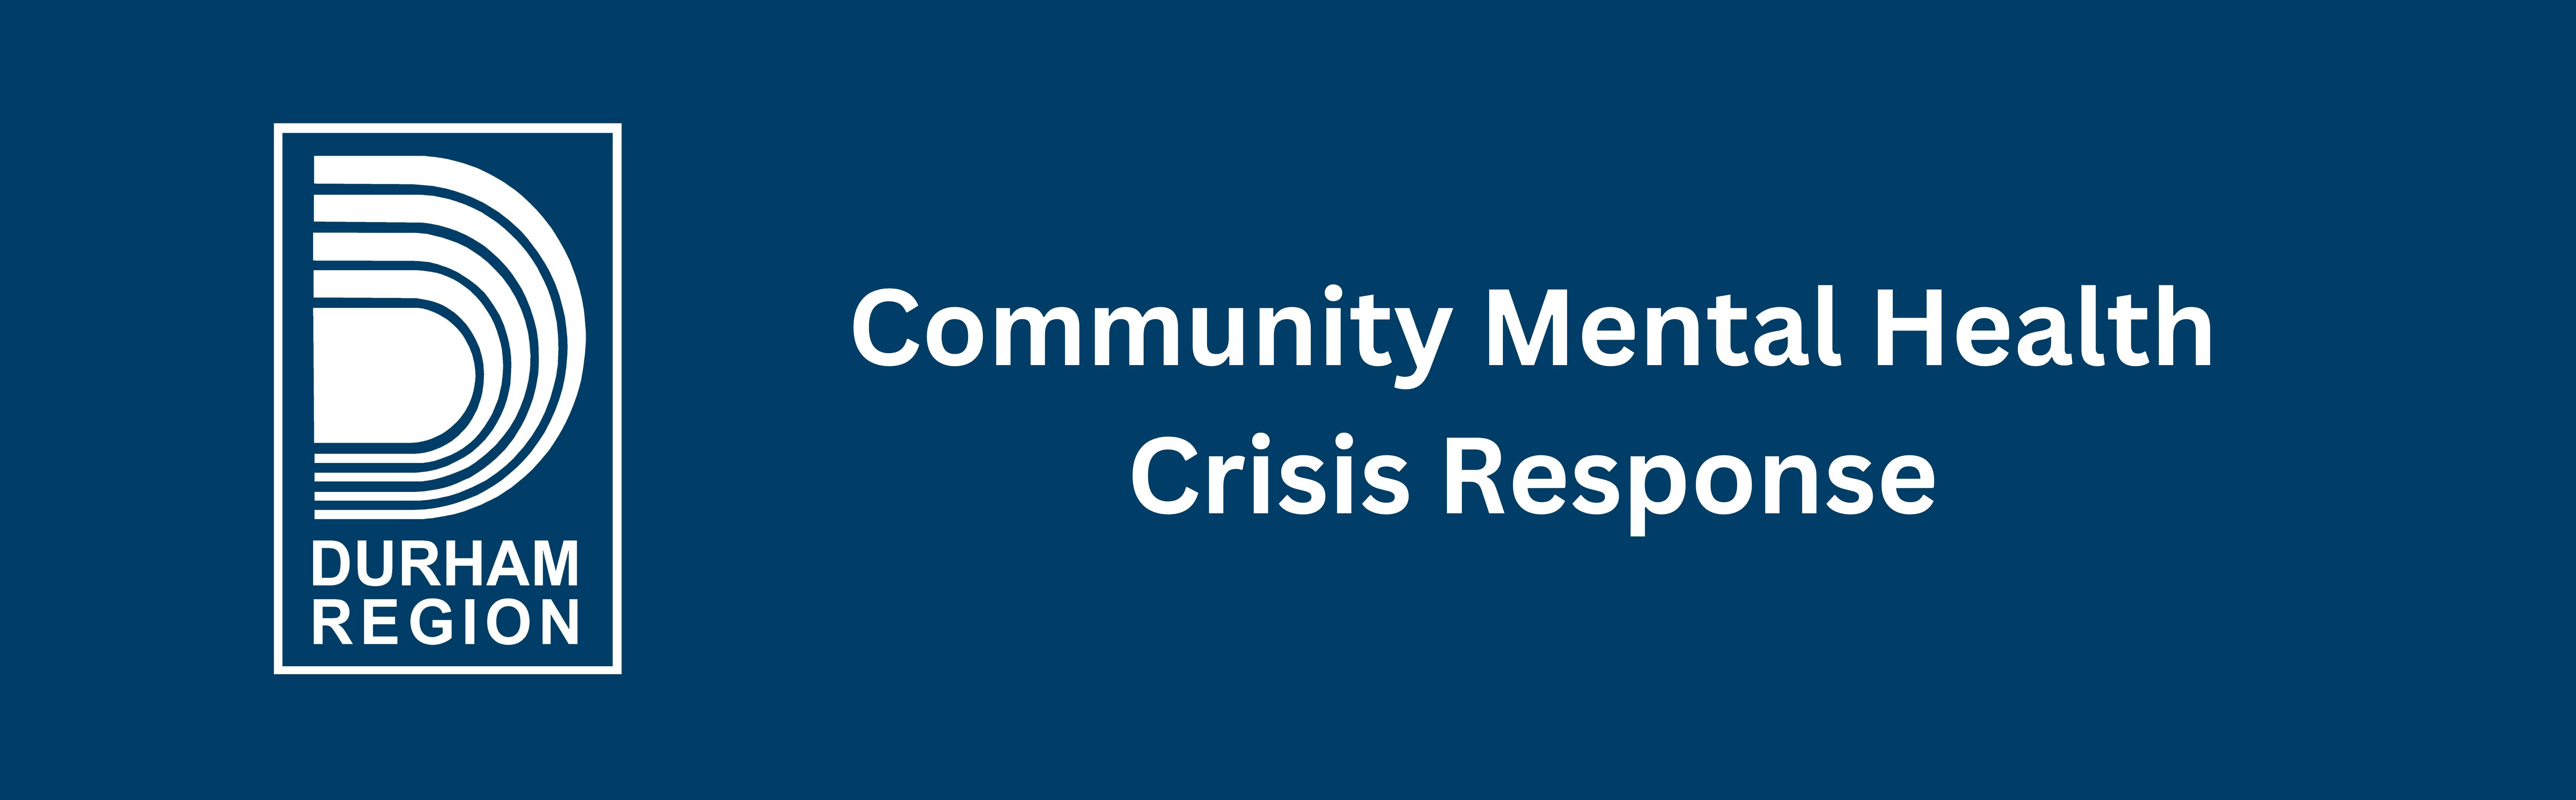 Community Mental Health Crisis Response